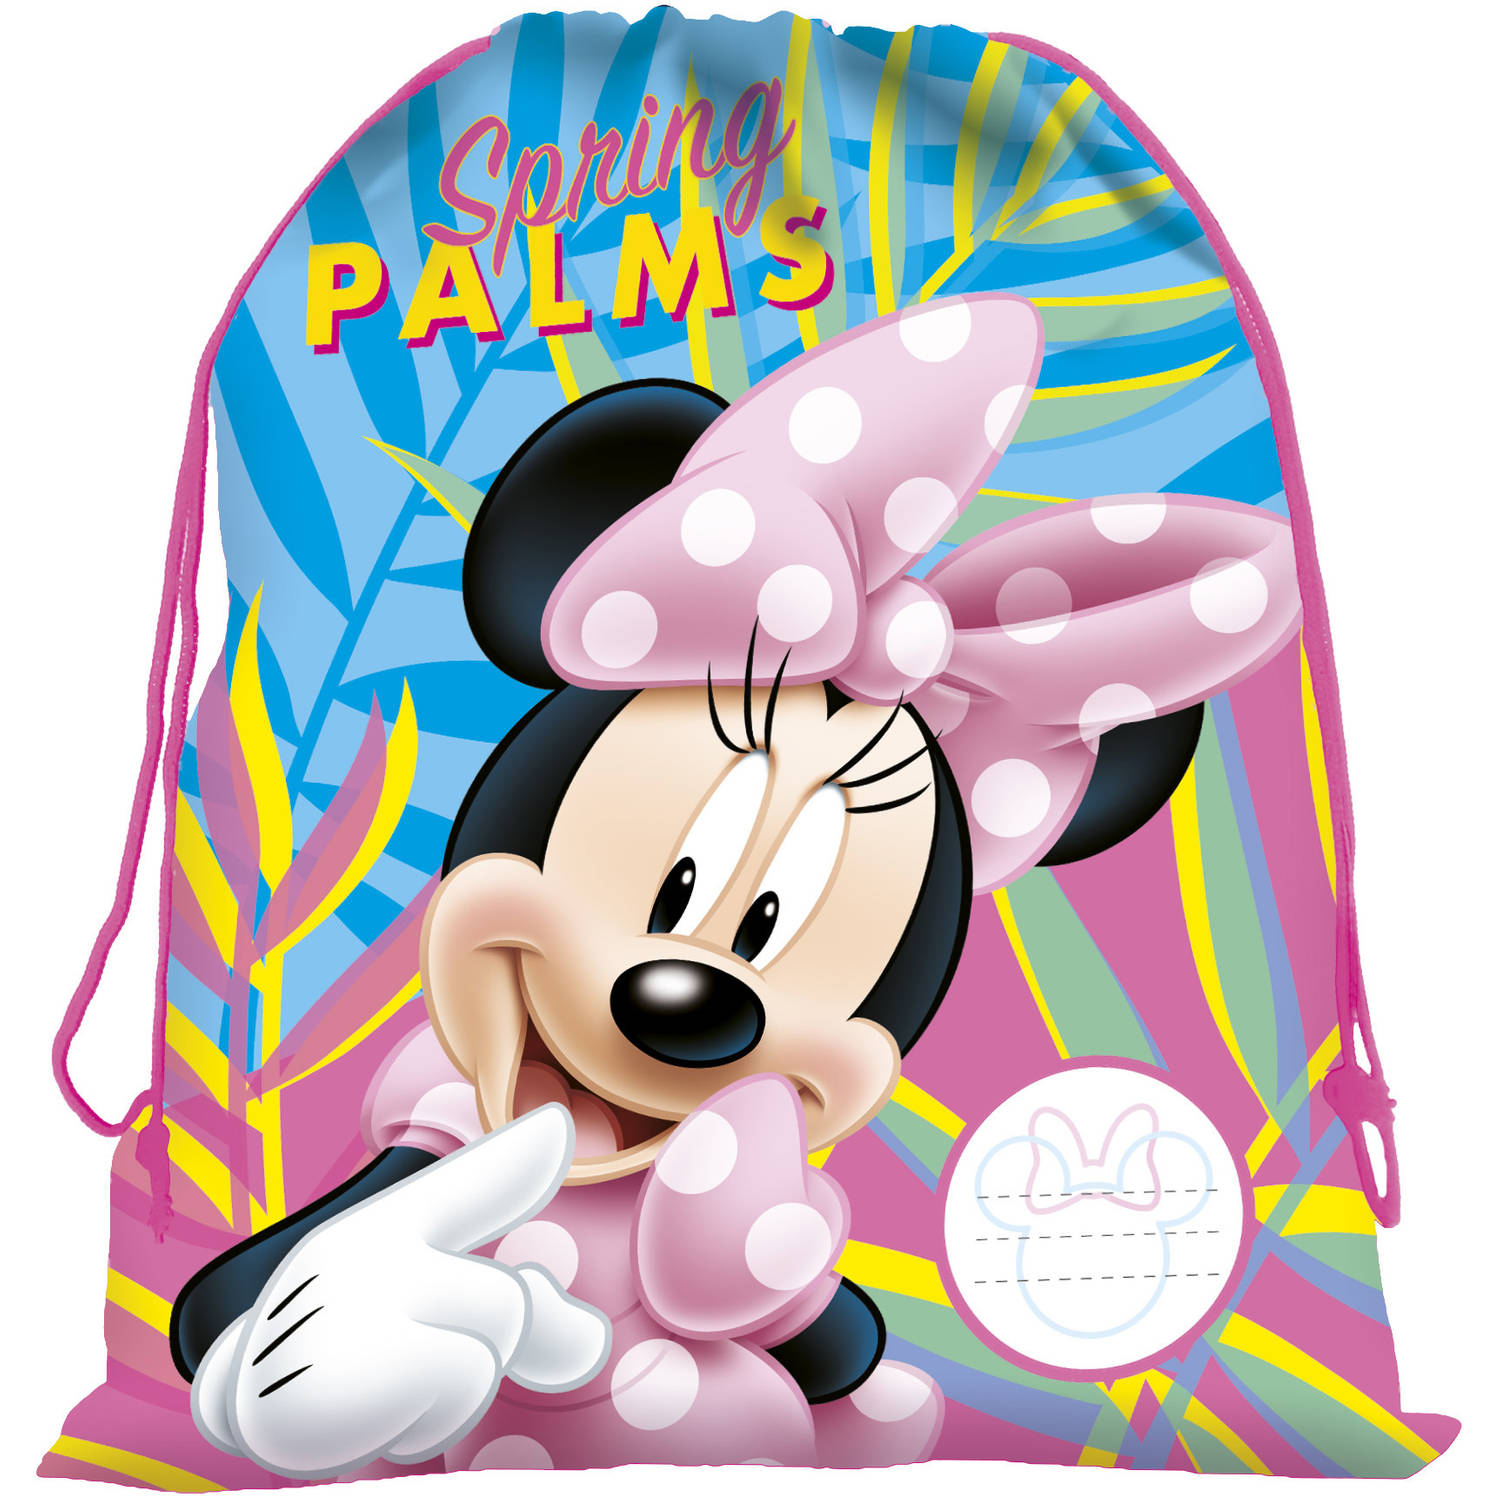 Disney Minnie Mouse Spring Palms - Gymbag - 42 x 33 cm - Multi